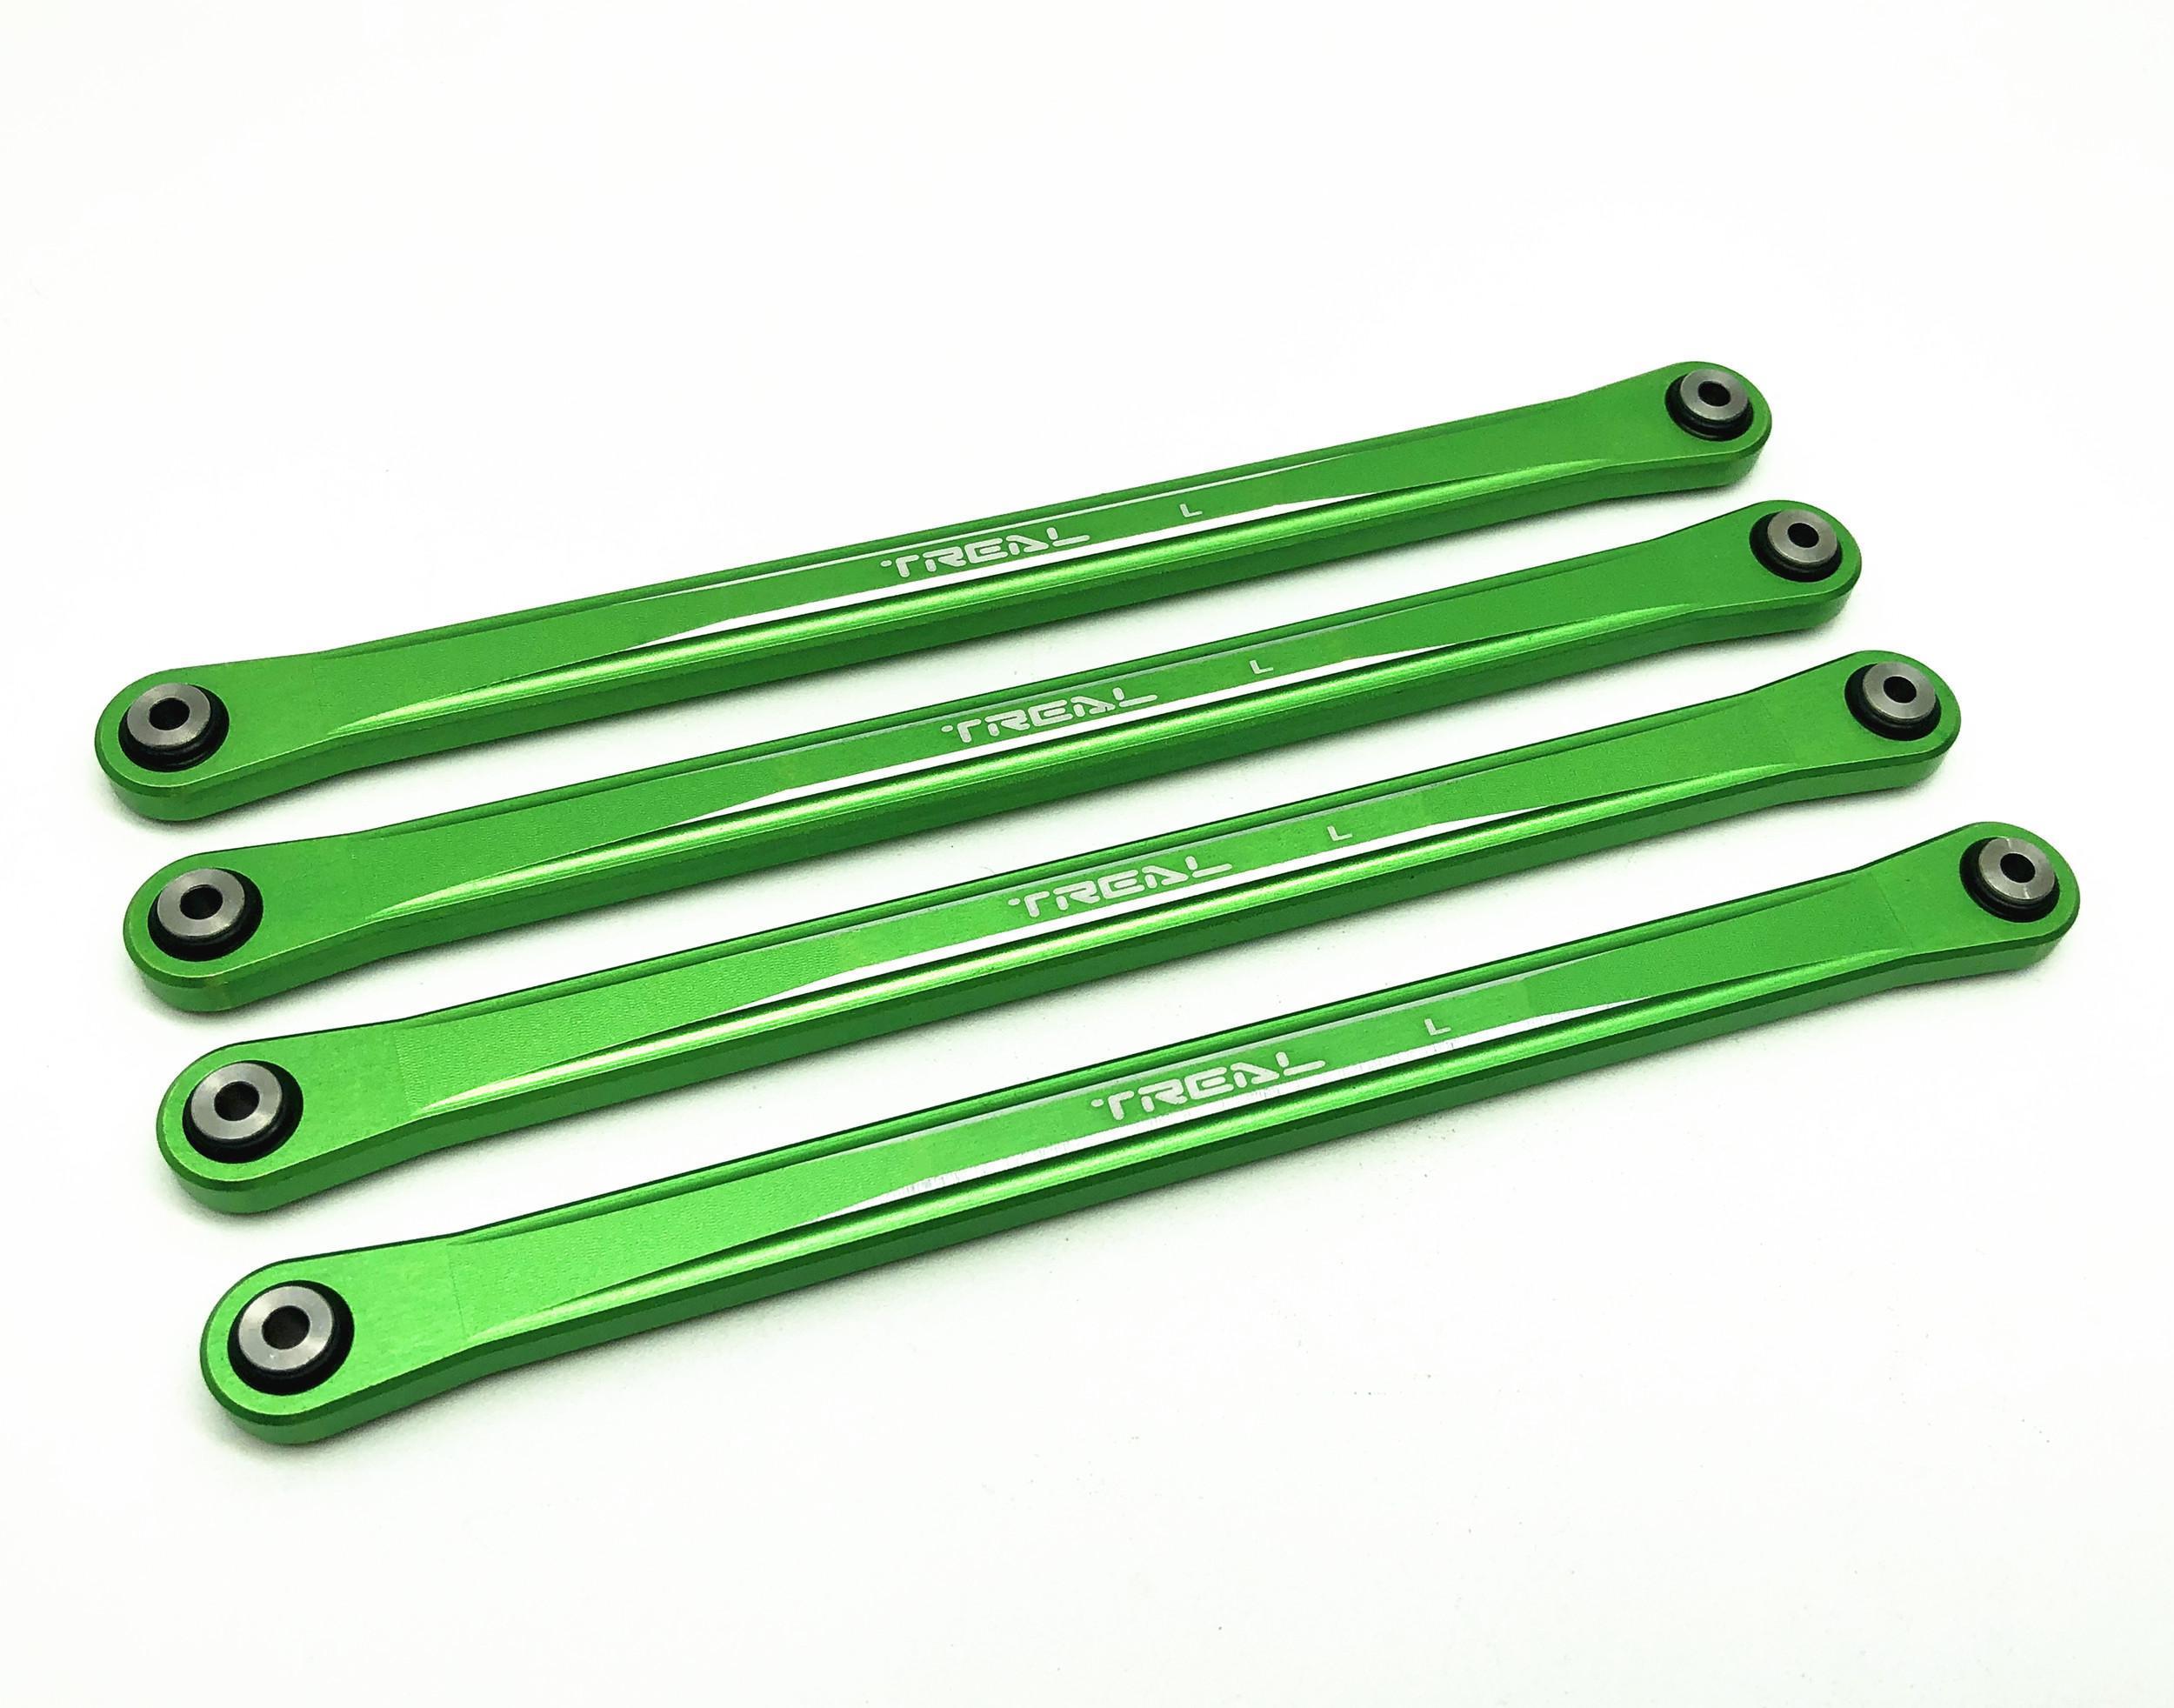 Treal Aluminum 7075 Lower Link Bars (4) Set for Losi LMT (Green) ...